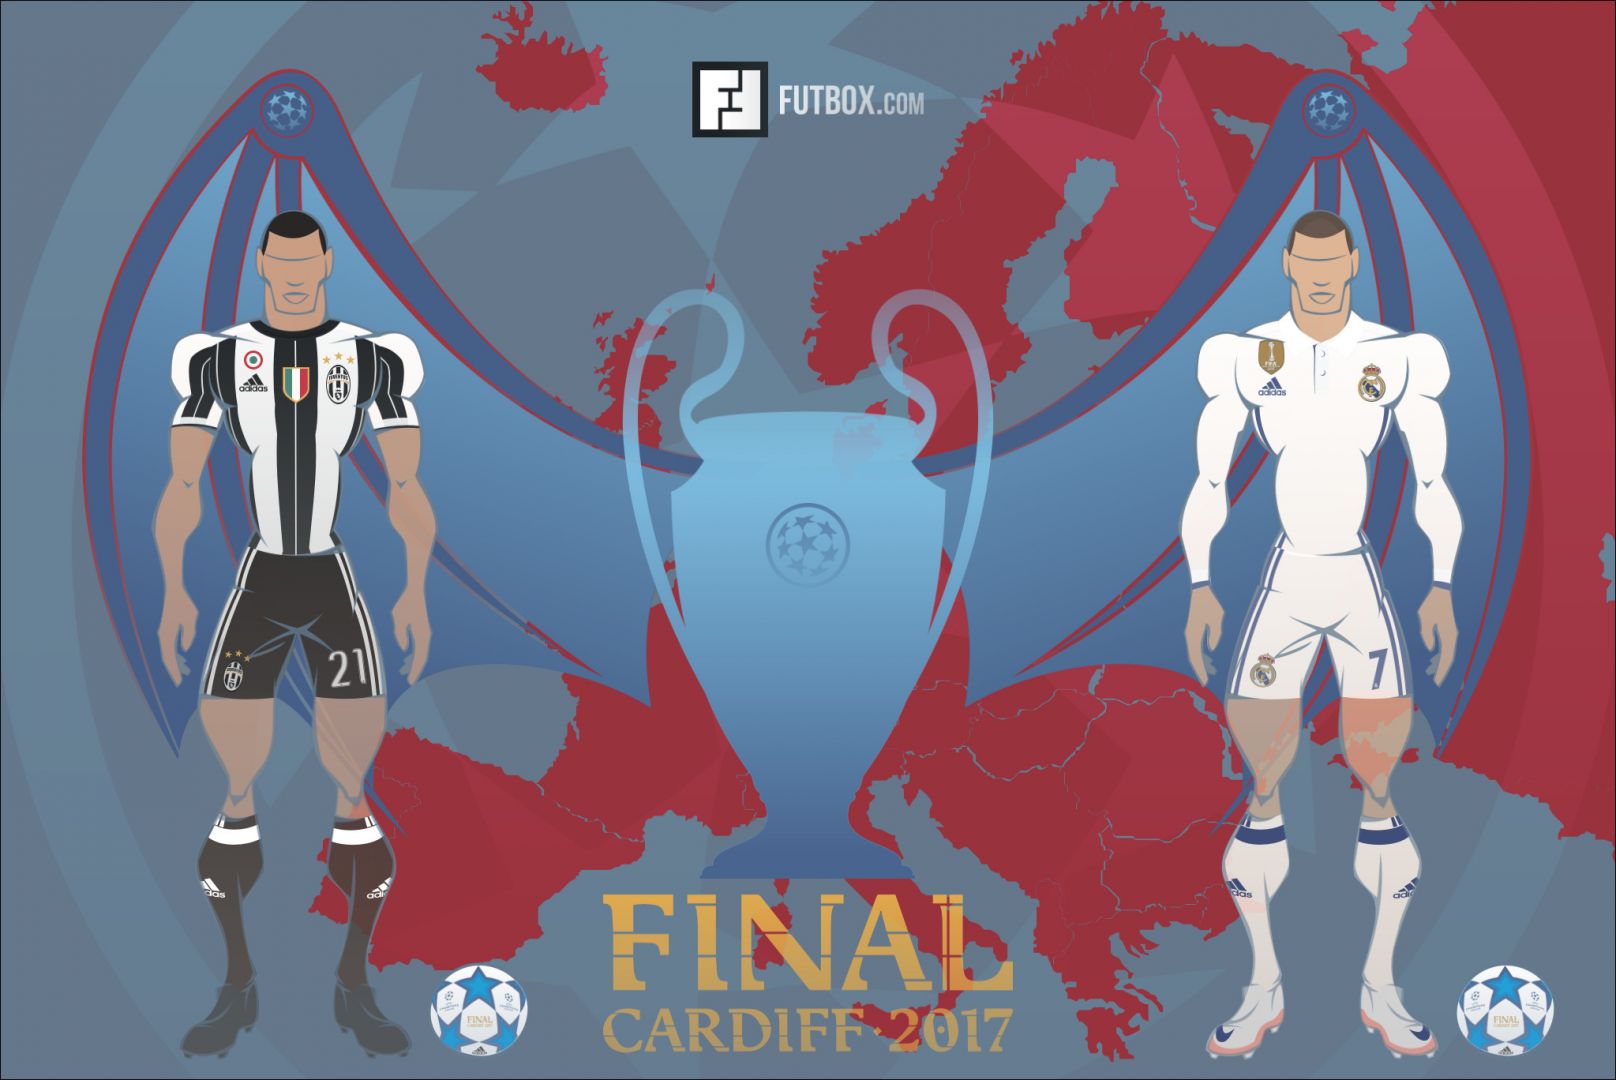 Final da Champions entre Juventus (ITA) e Real Madrid (ESP)